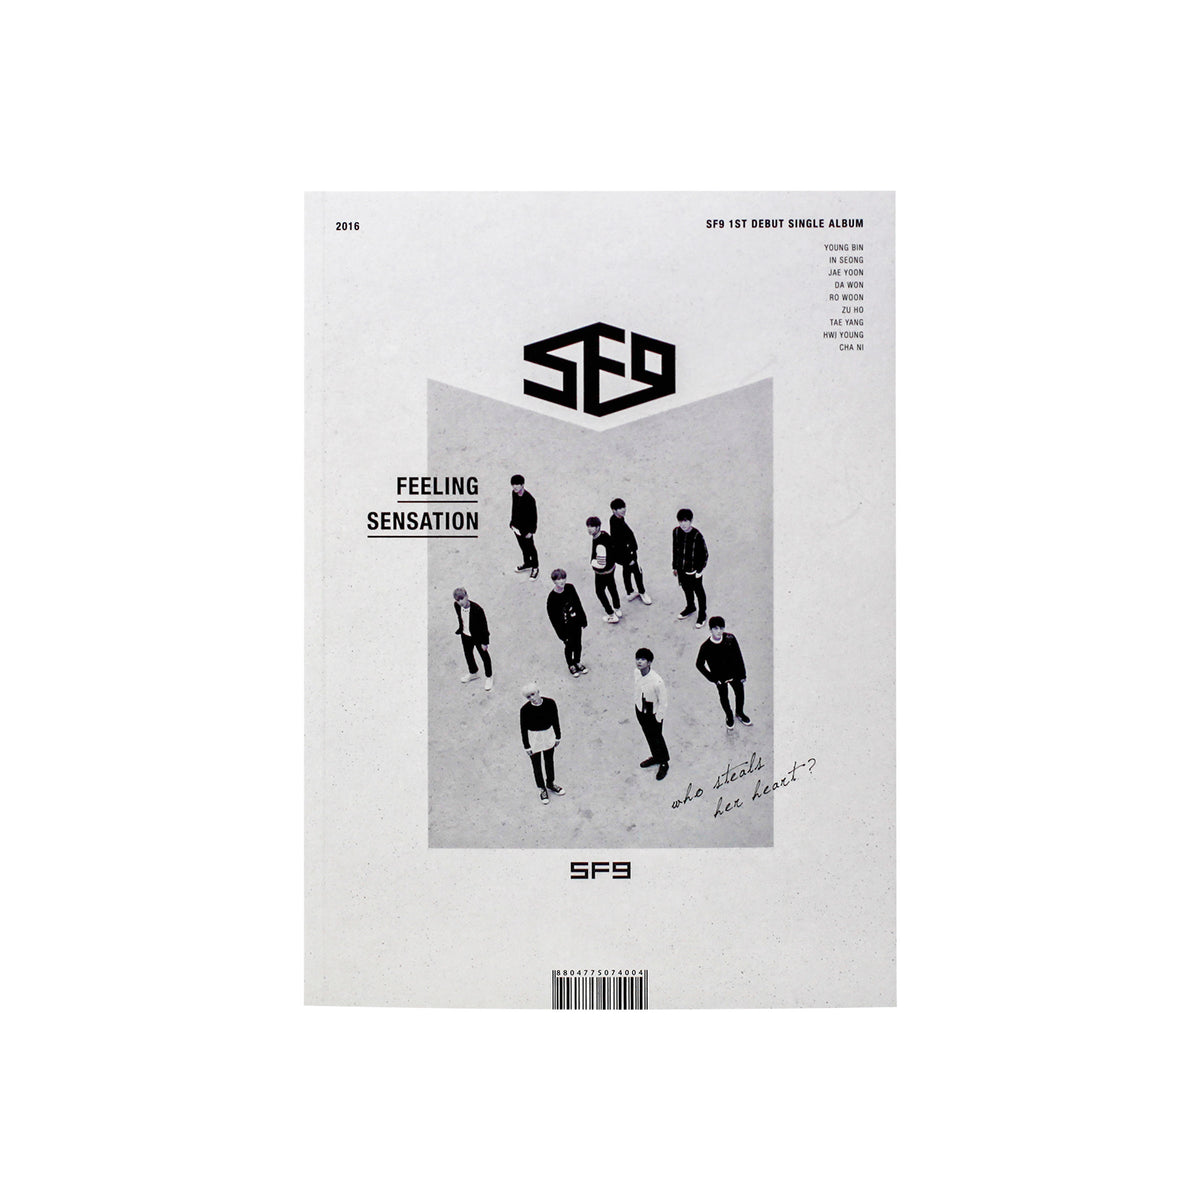 SF9 - Feeling Sensation Debut Single Album - main image - image 3